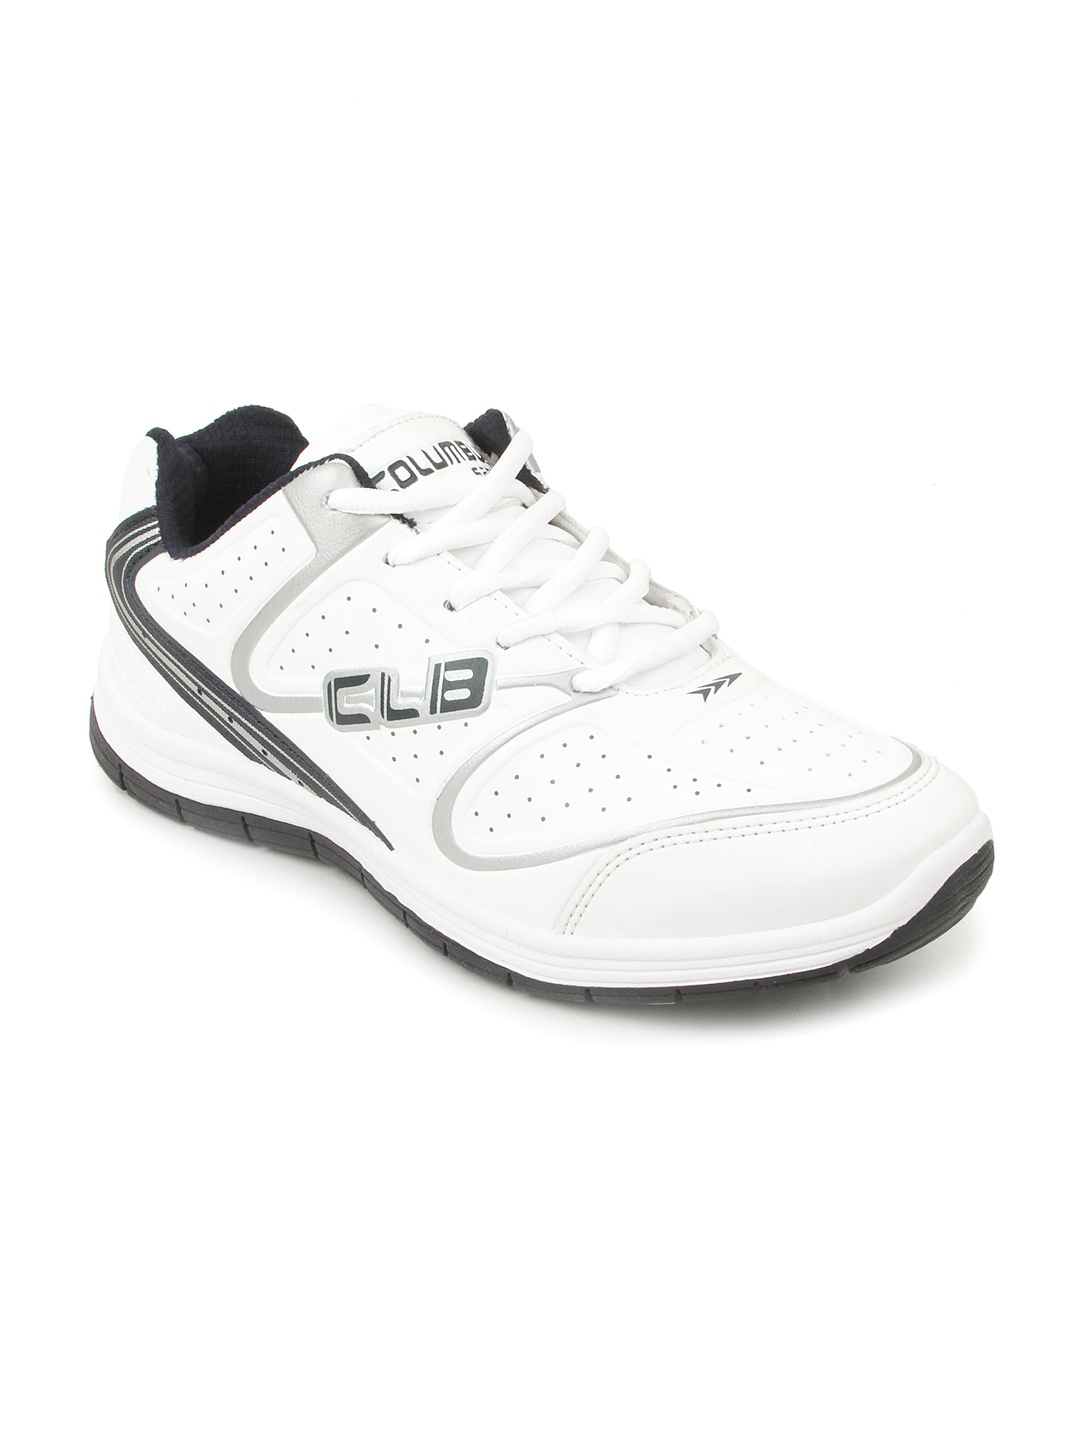 Buy Columbus Men White Sports Shoes - Sports Shoes for Men 694027 | Myntra